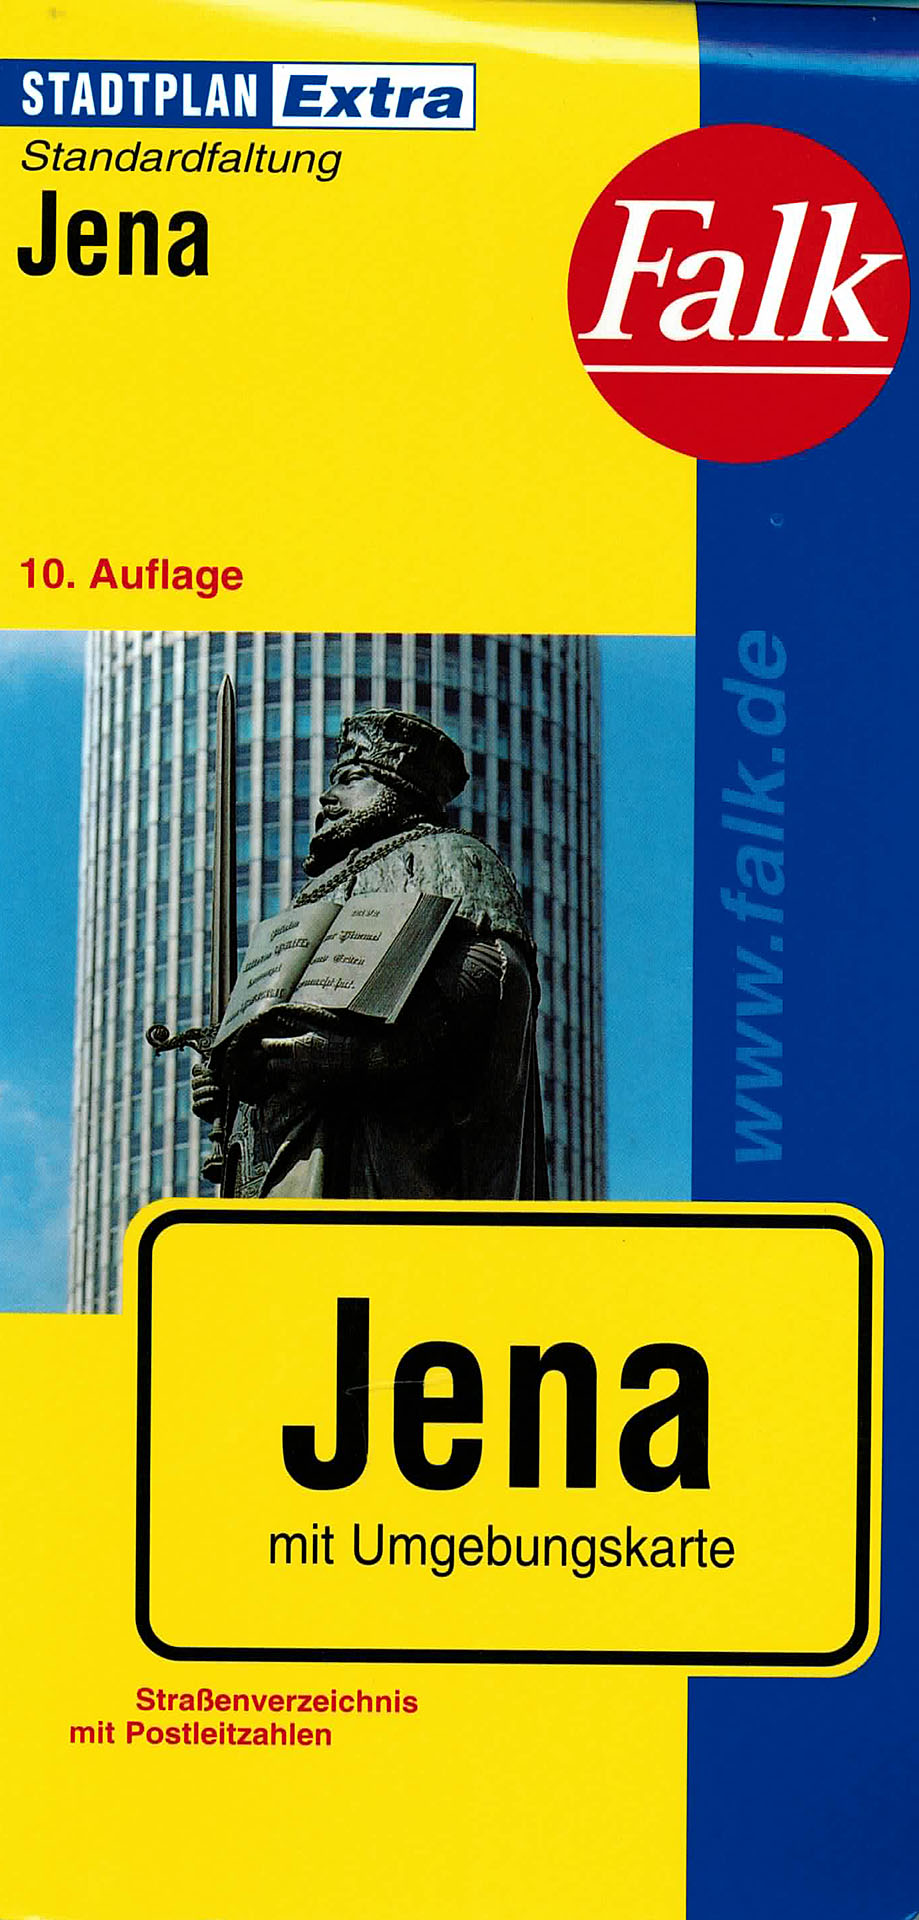 Stadtplan Extra - Jena